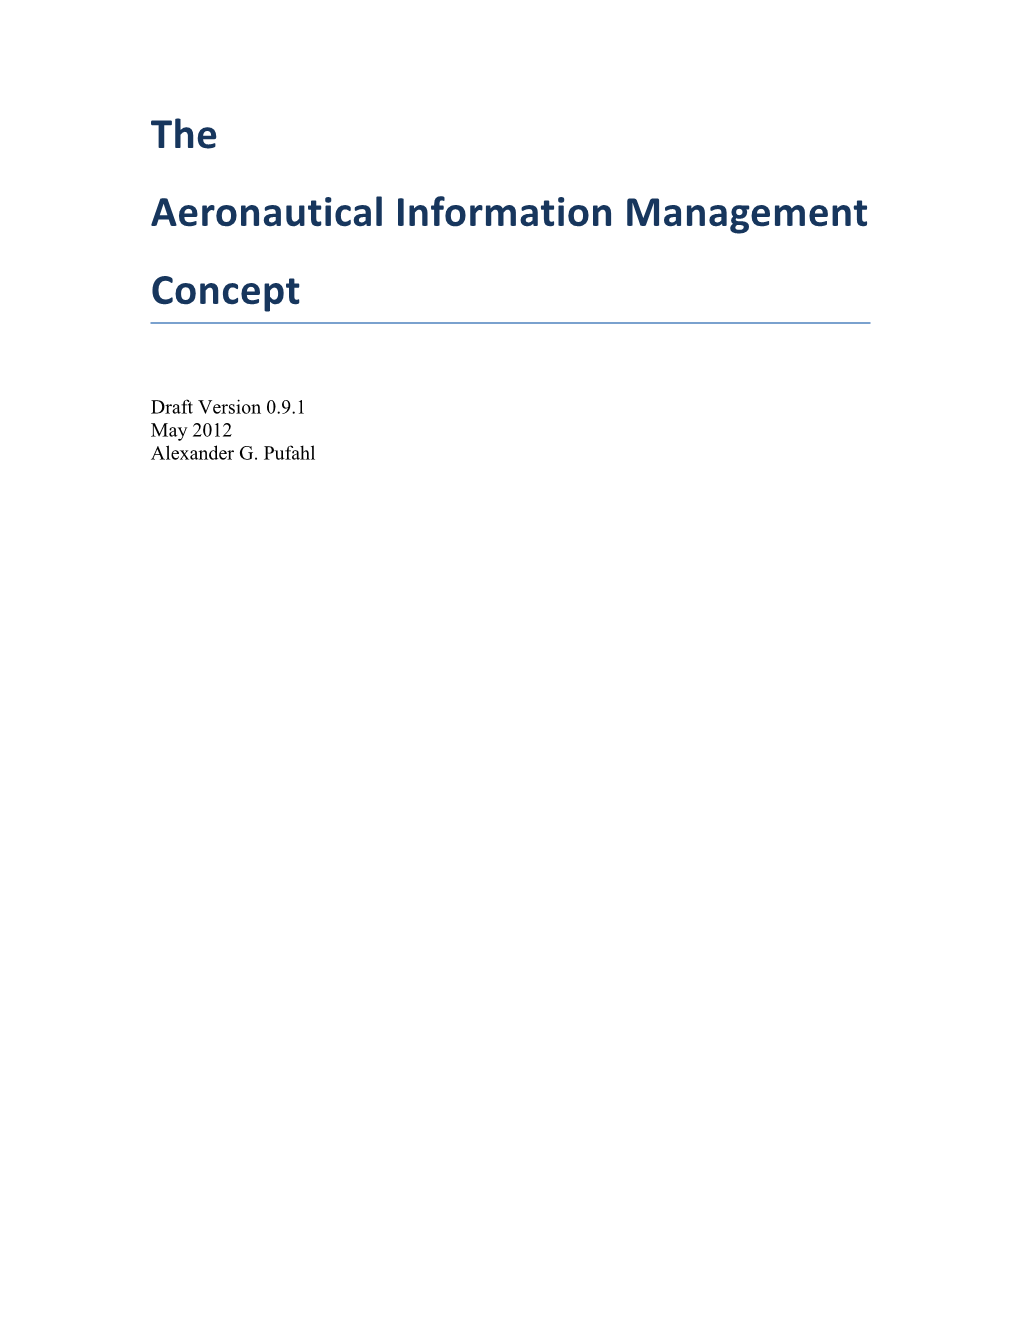 The Aeronautical Information Management Concept